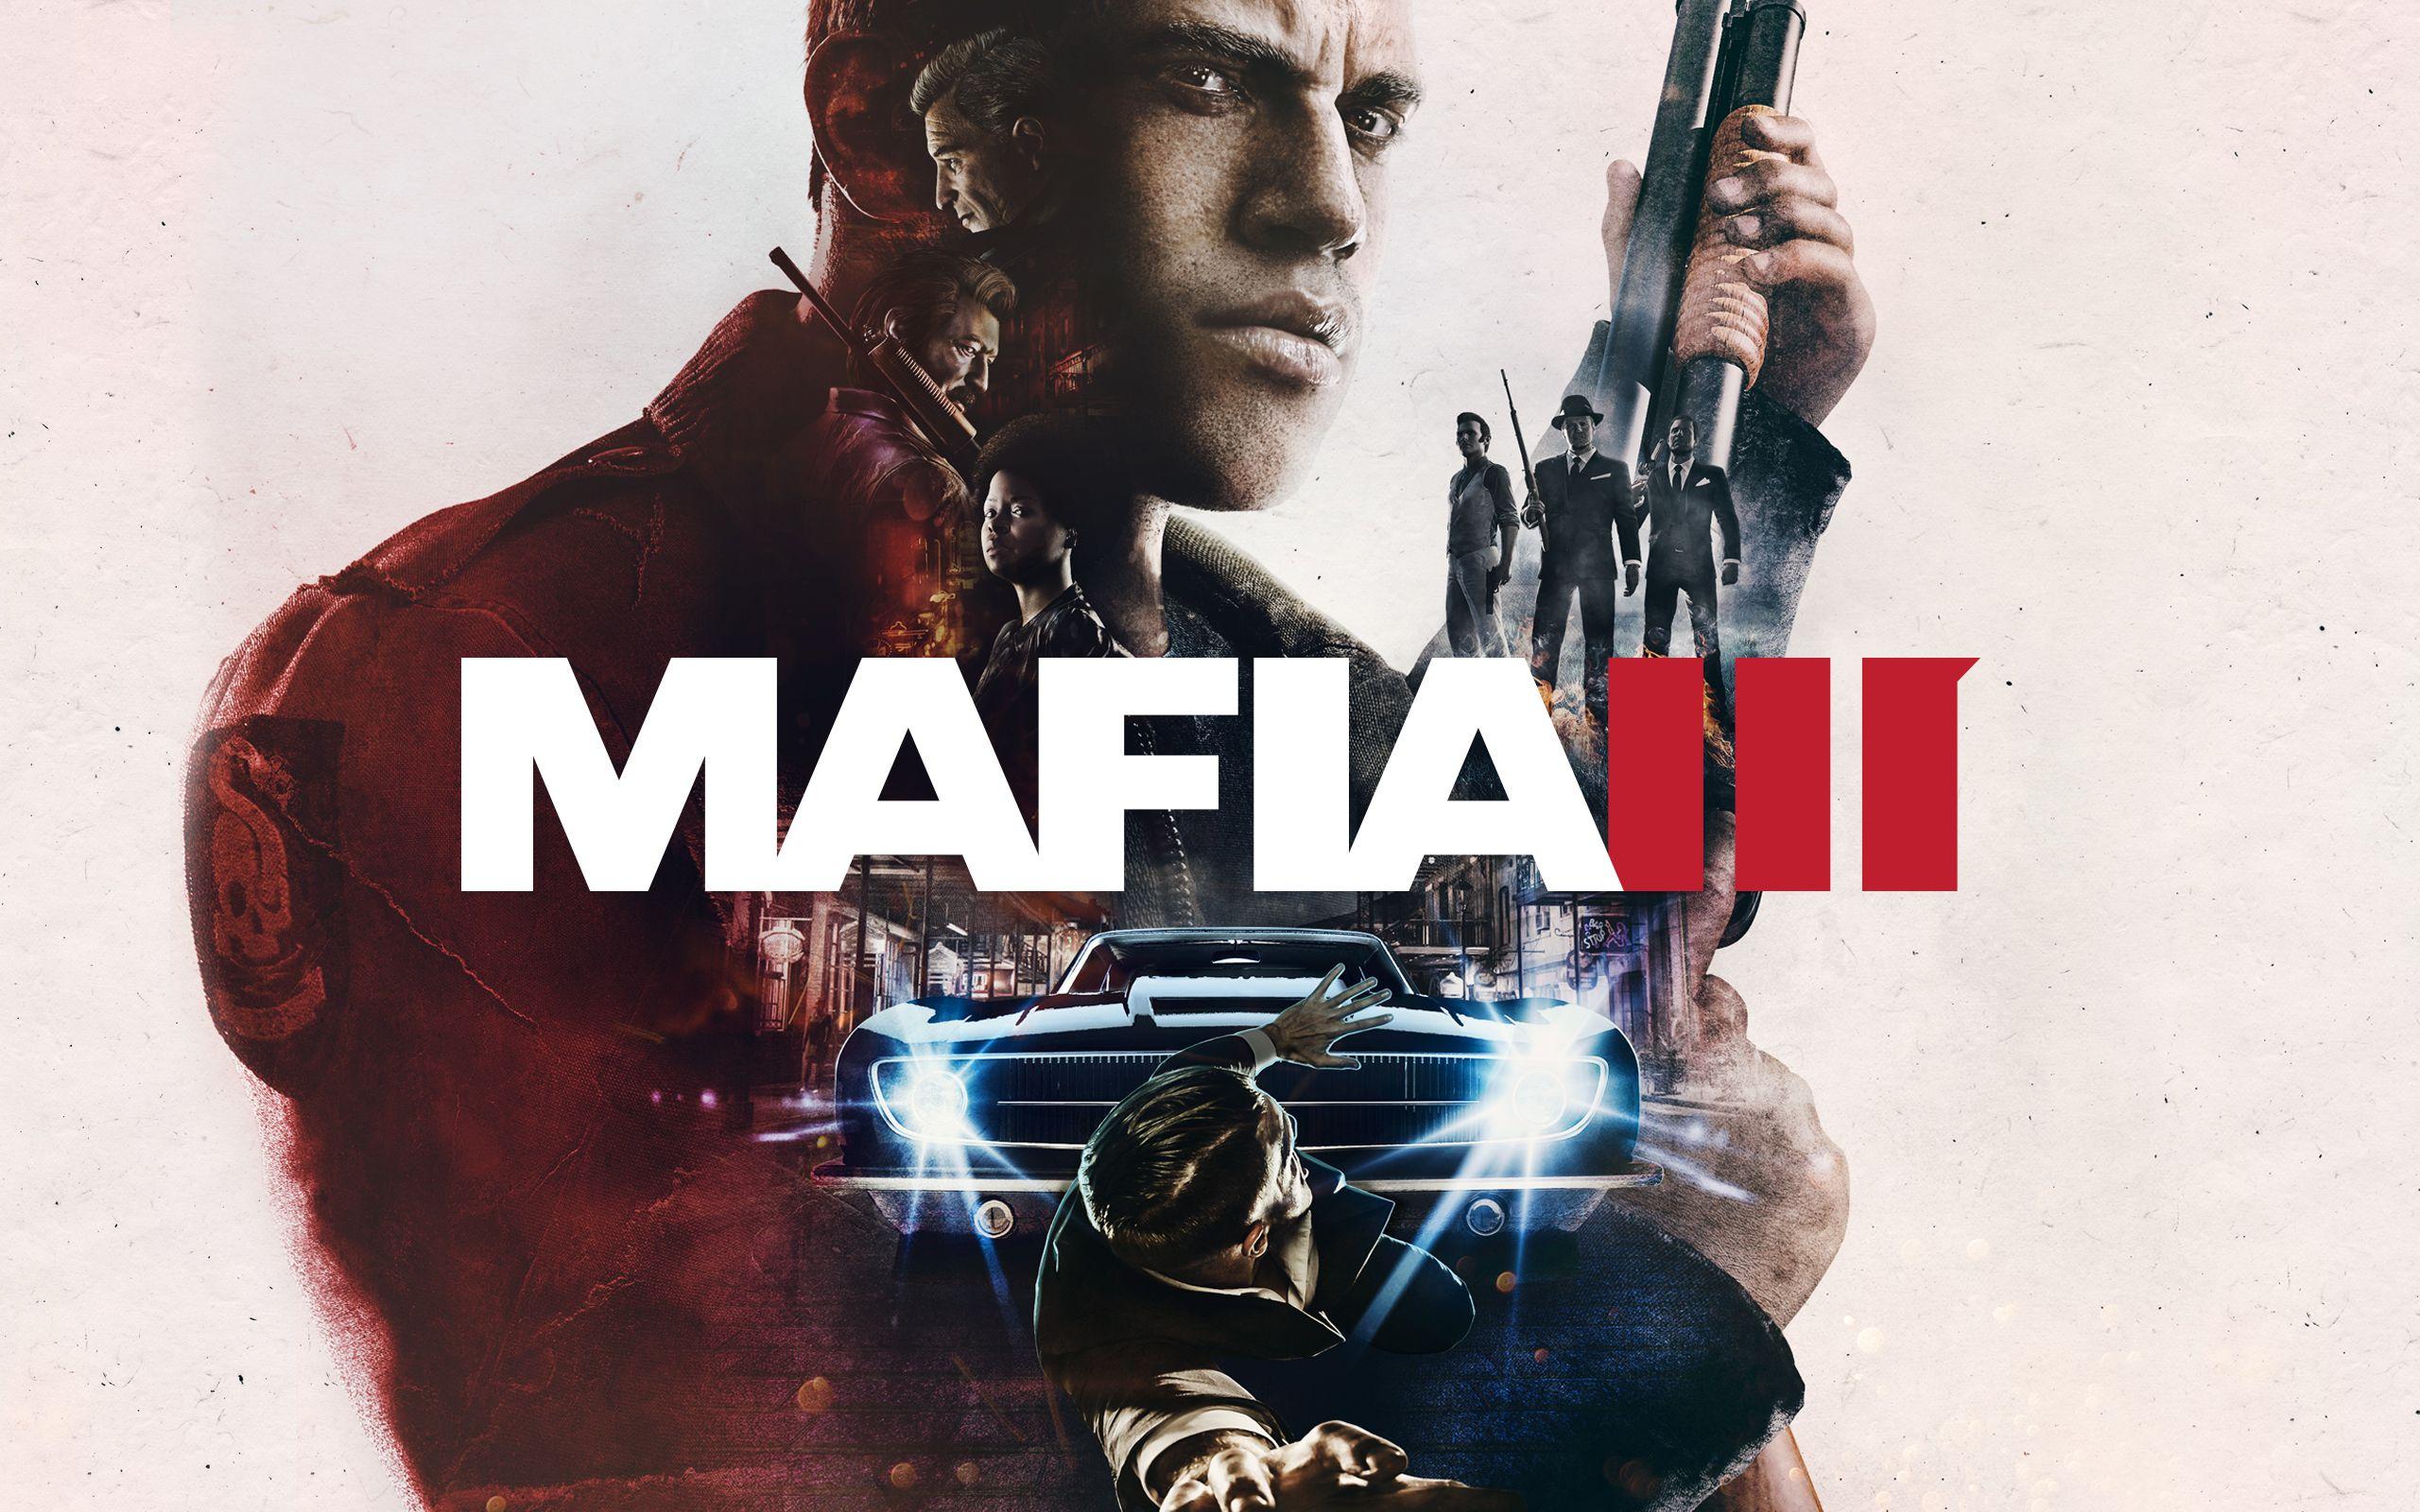 Mafia II HD Wallpaper and Background Image